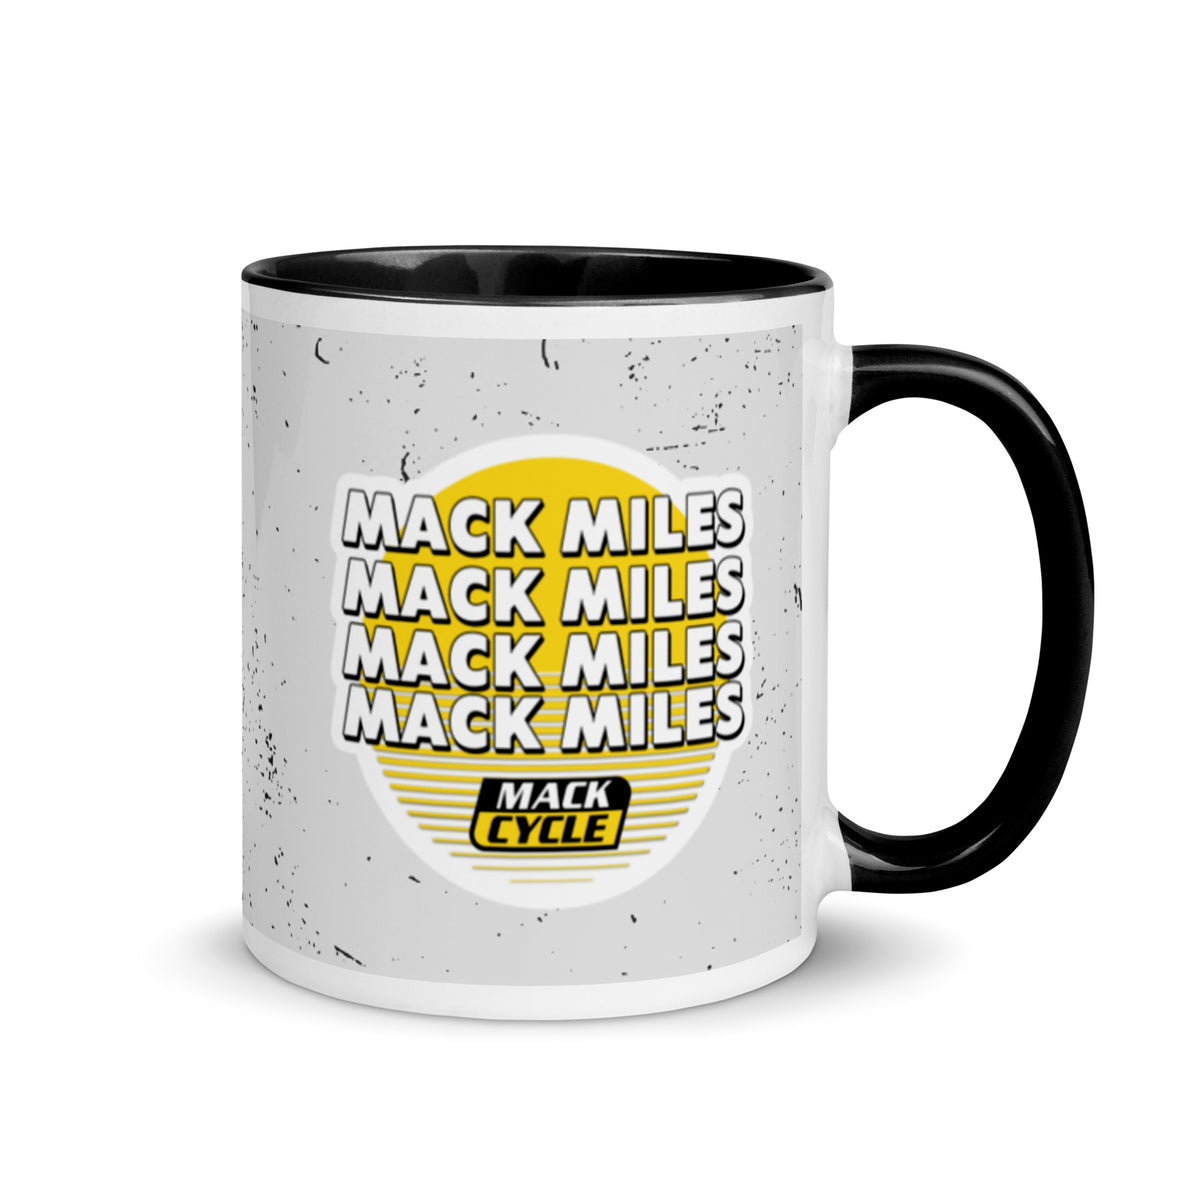 Mack Miles Mug with Color Inside